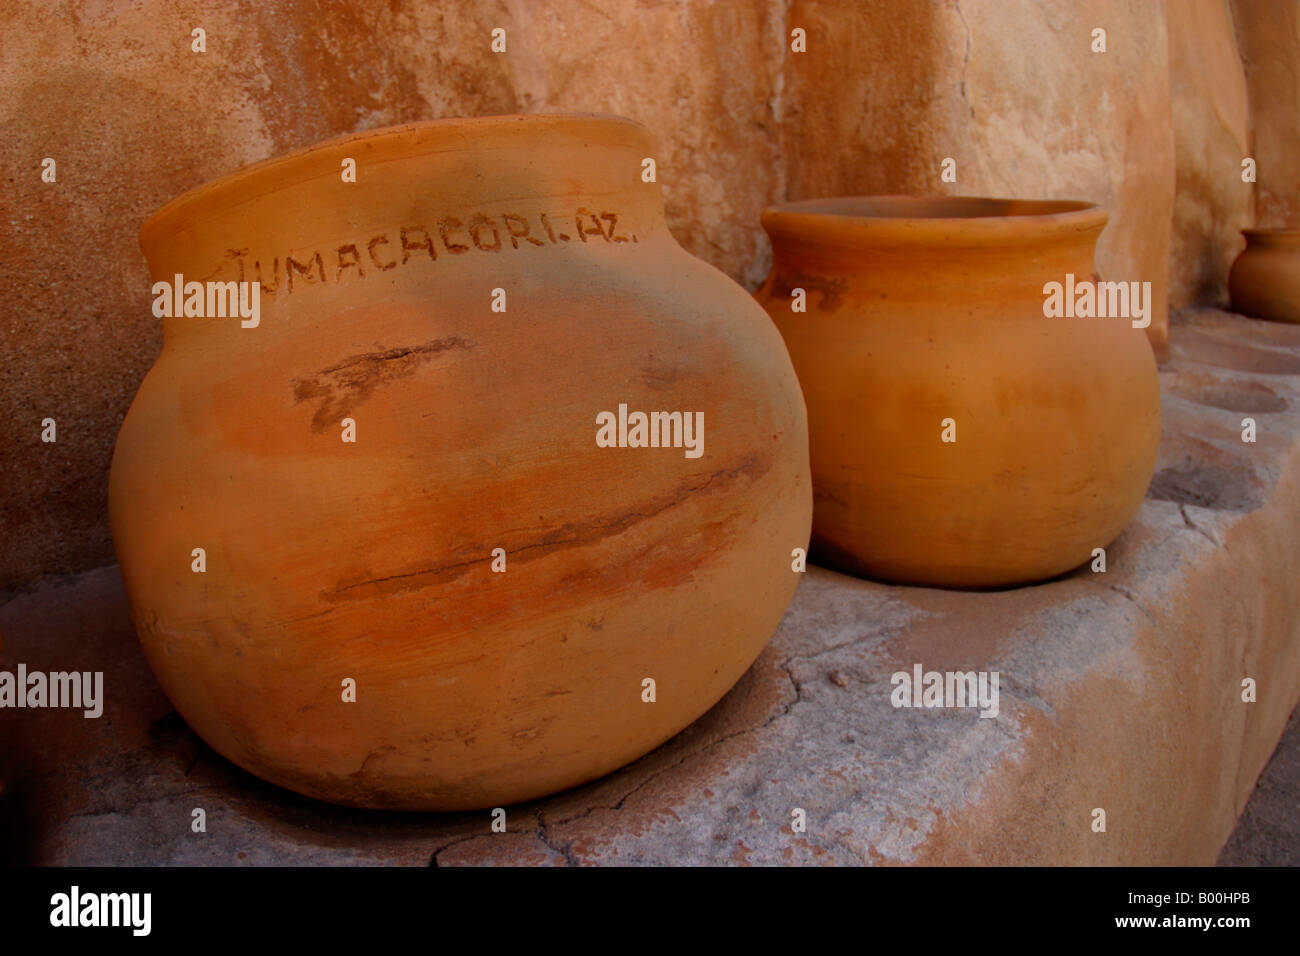 Clay pots and adobe walls at Tumacacori Mission in Arizona Stock Photo